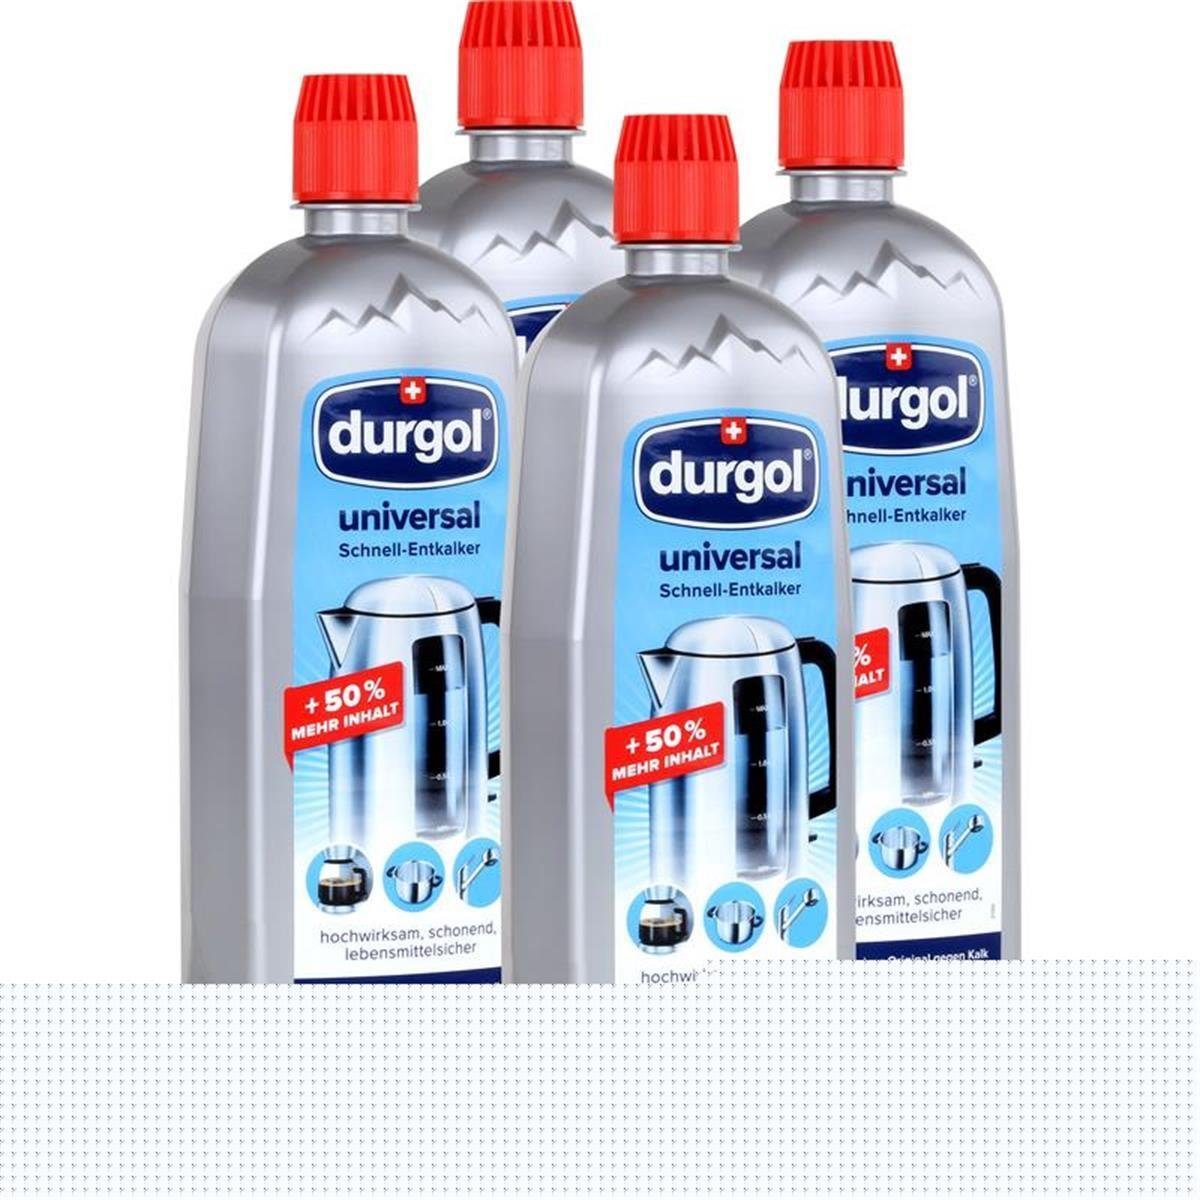 Durgol Durgol Universal Schnell-Entkalker 750ml - schonend, hochwirksam (4er Entkalker